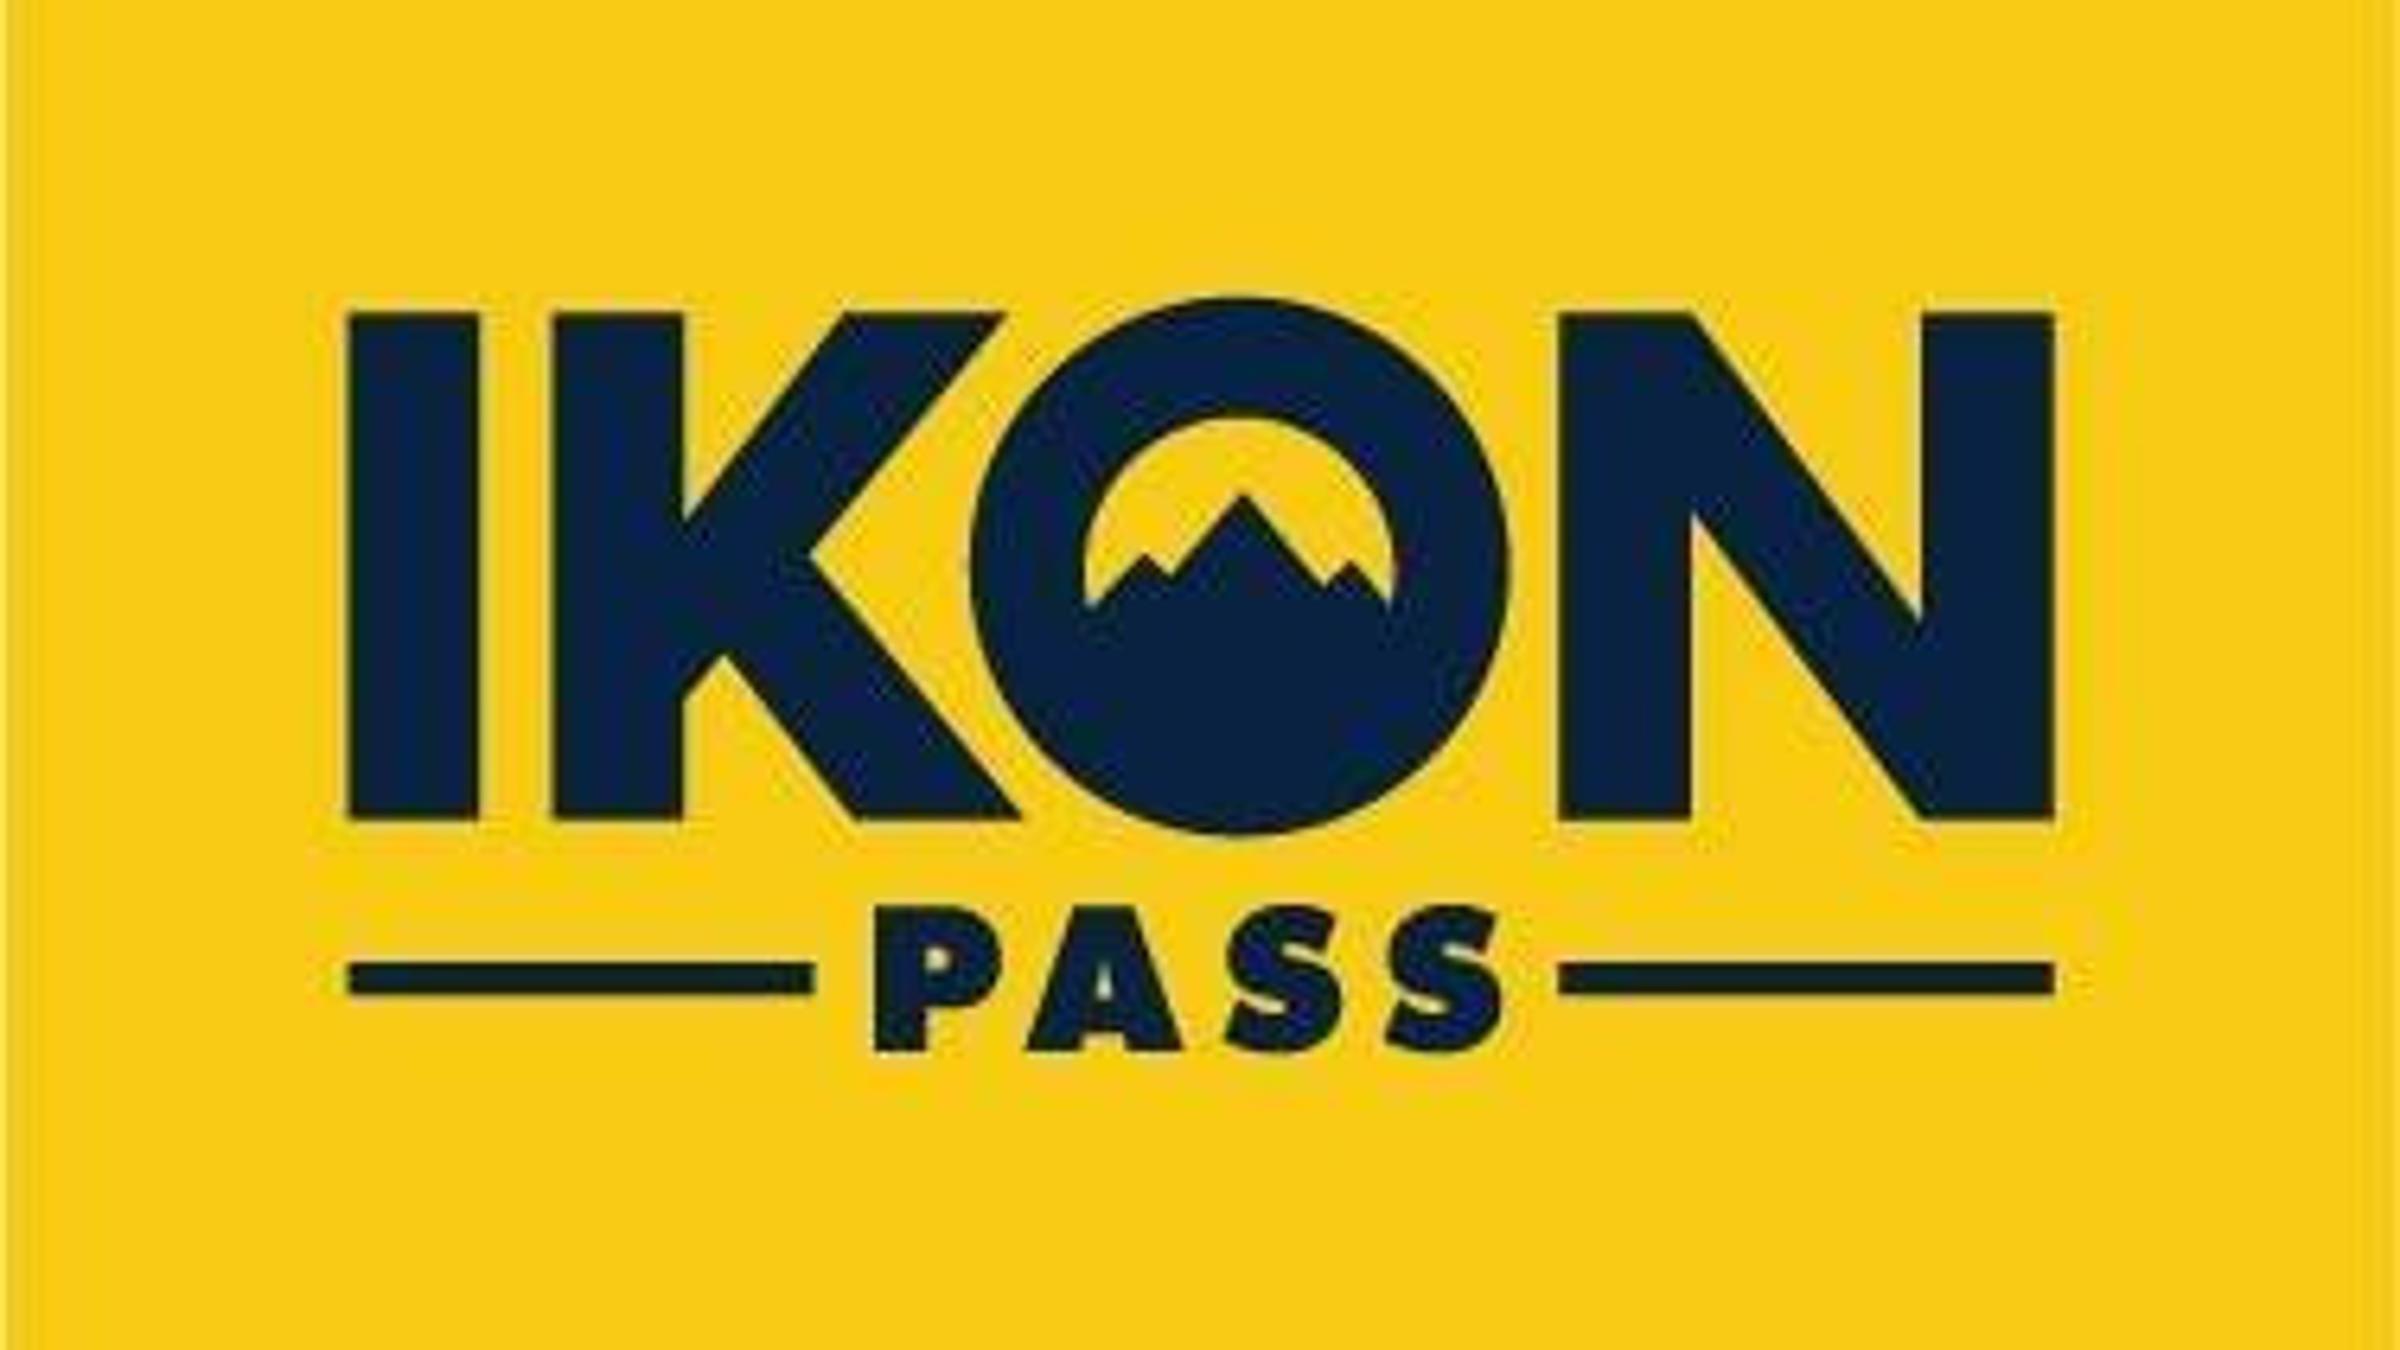 2019_05_01_IK_Ikon Pass Social Logo - Square.jpg